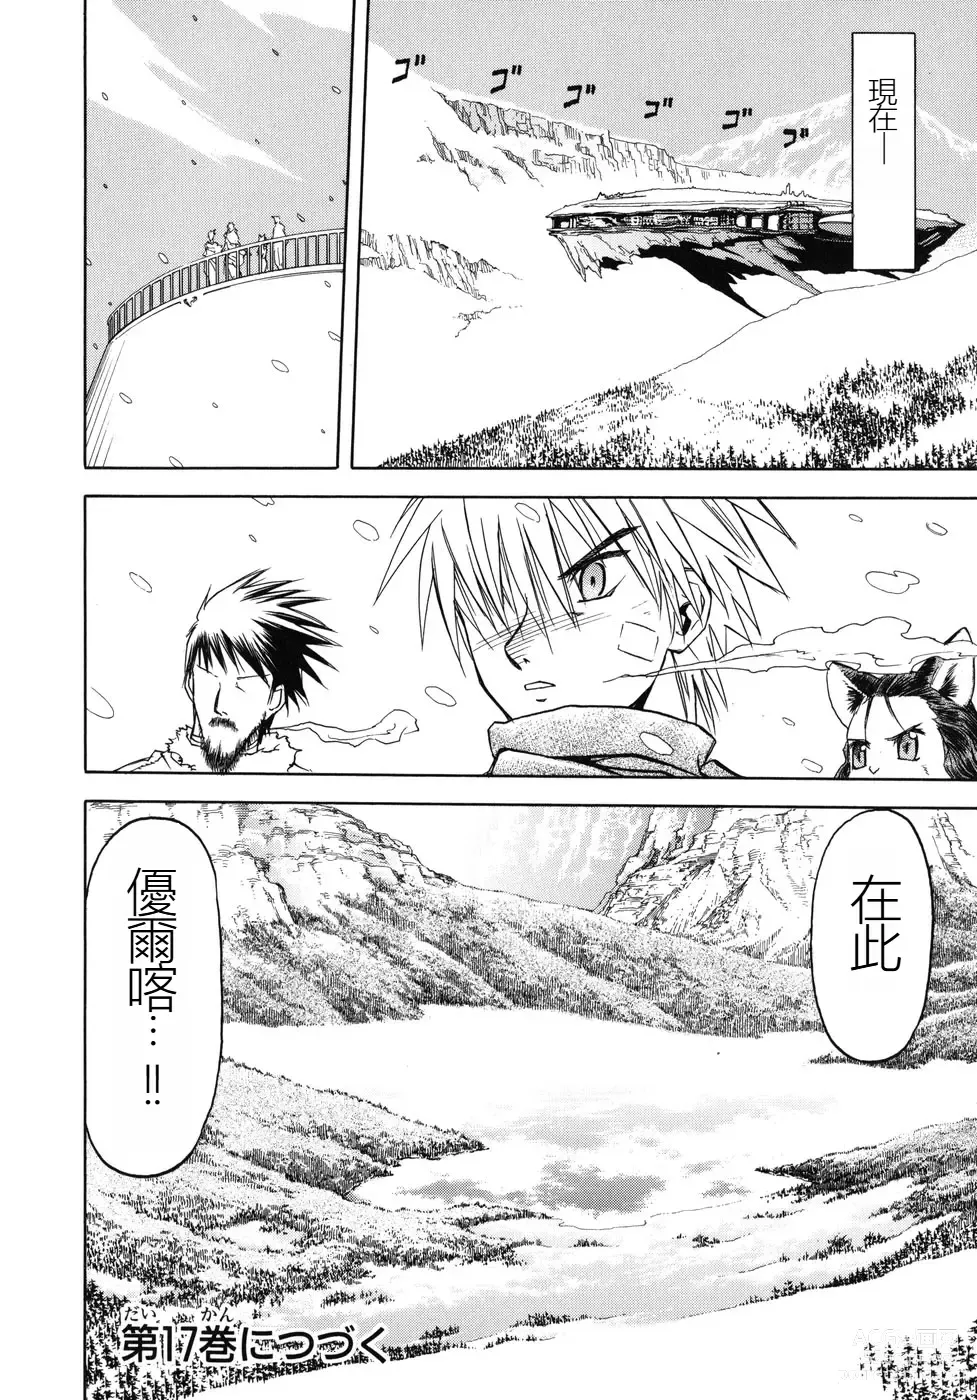 Page 195 of manga EDENs BOwY 16